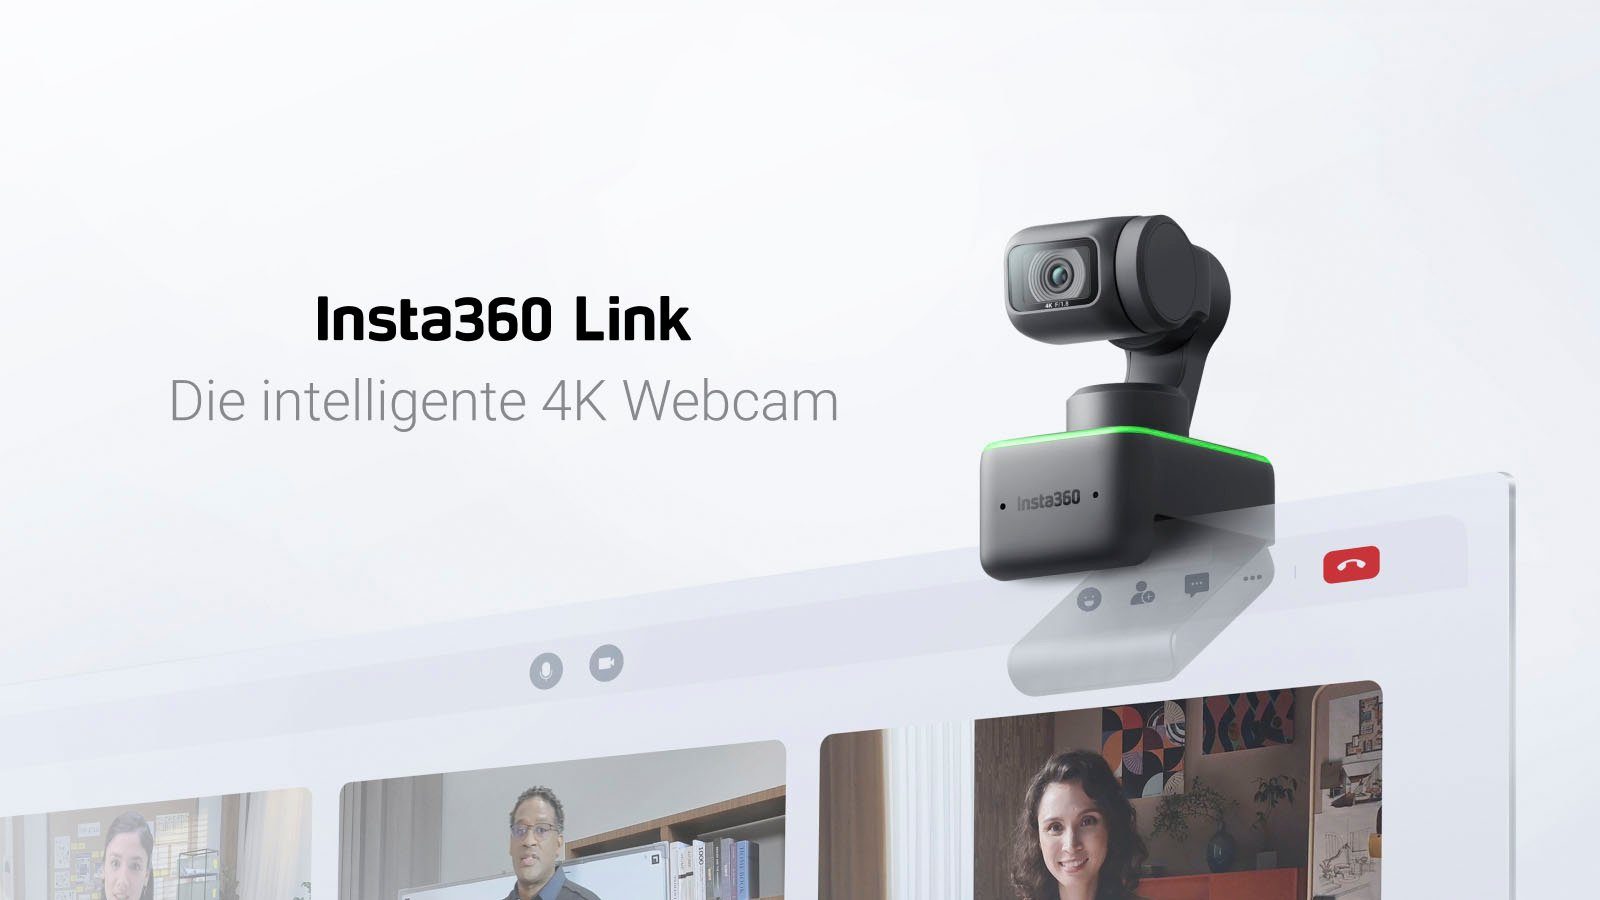 HD) Webcam Insta360 Link Ultra (4K